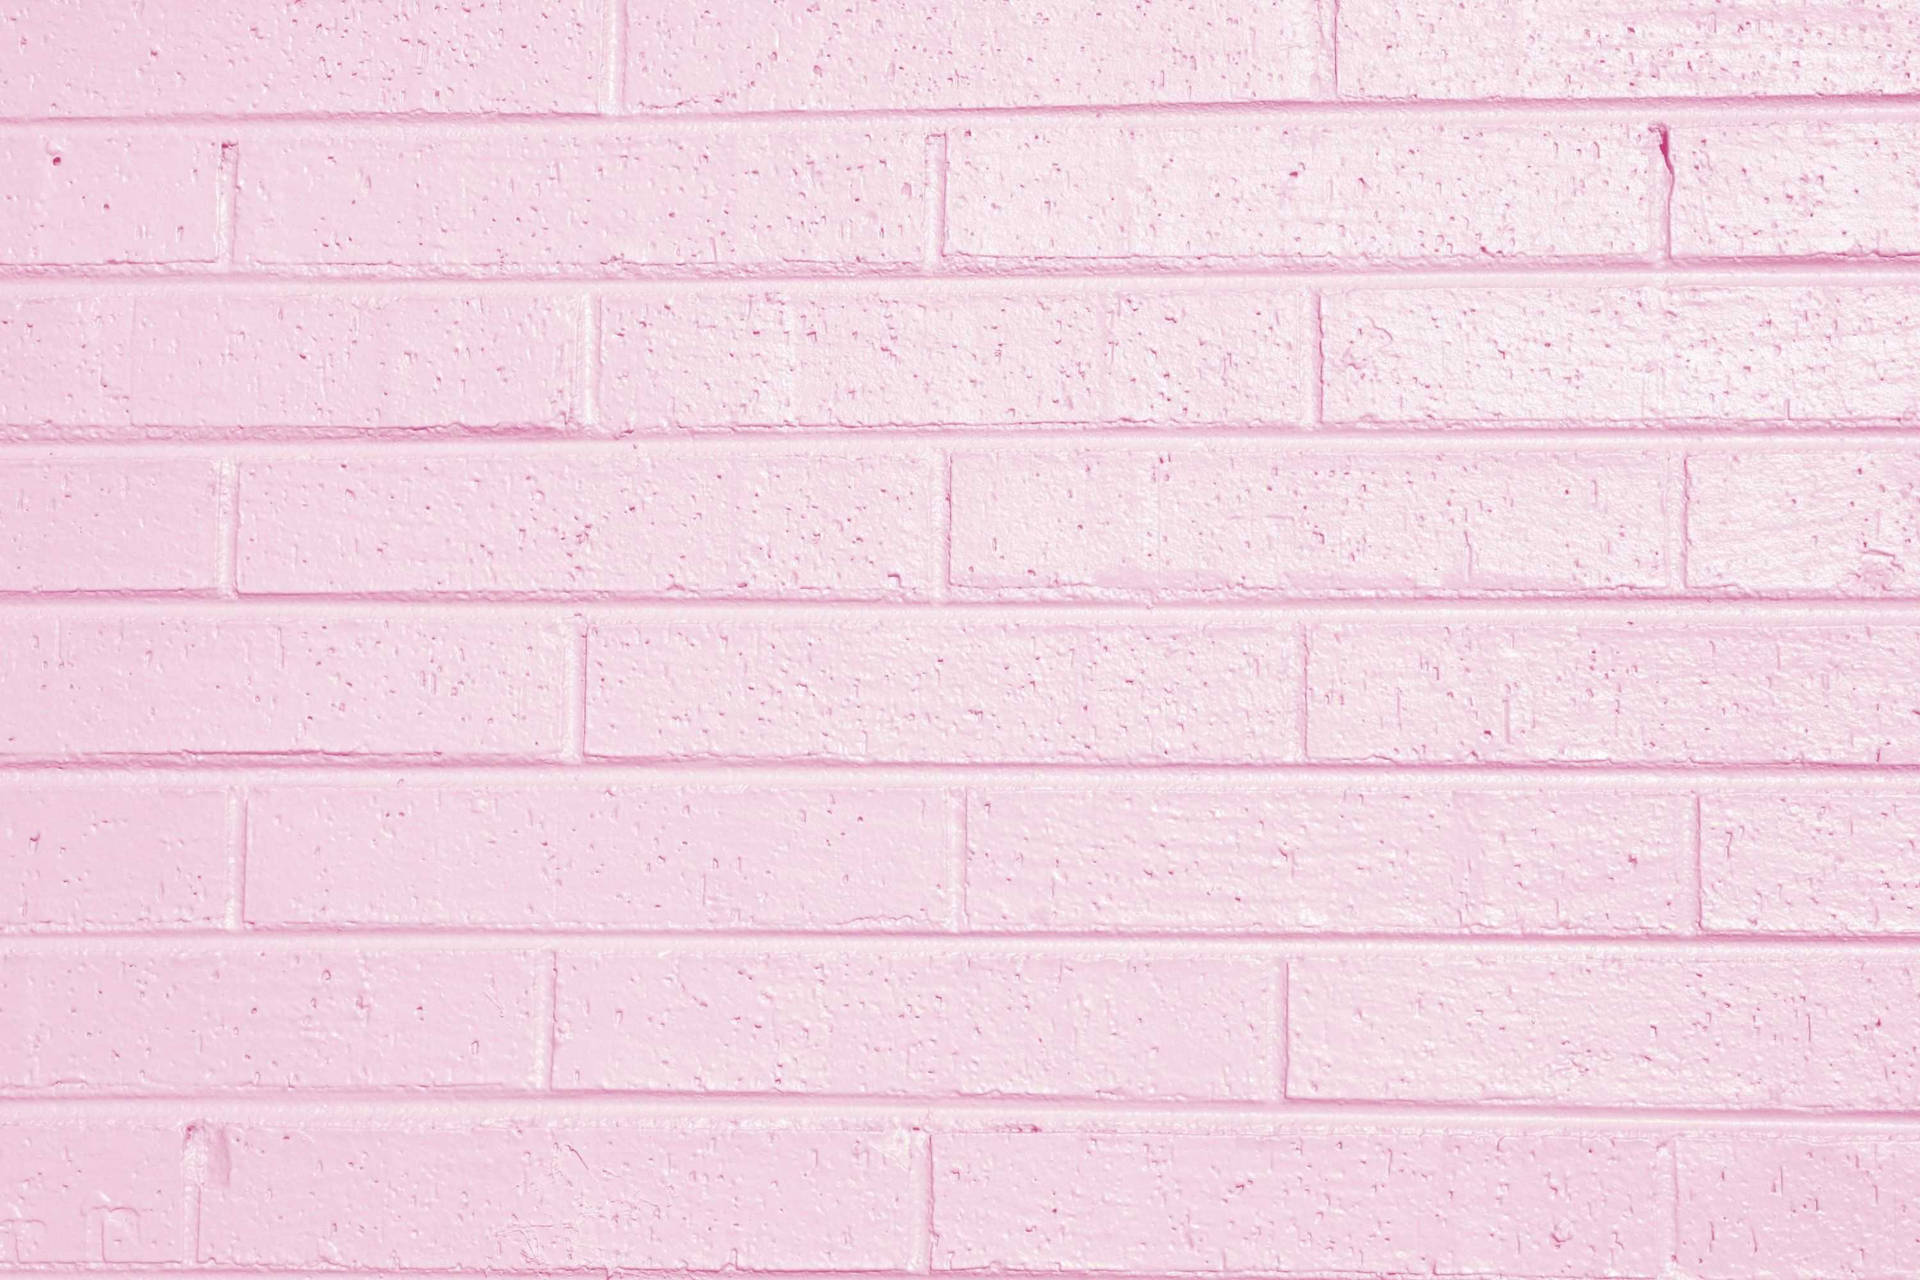 IPhone Pink Aesthetic Brick Wall Wallpaper